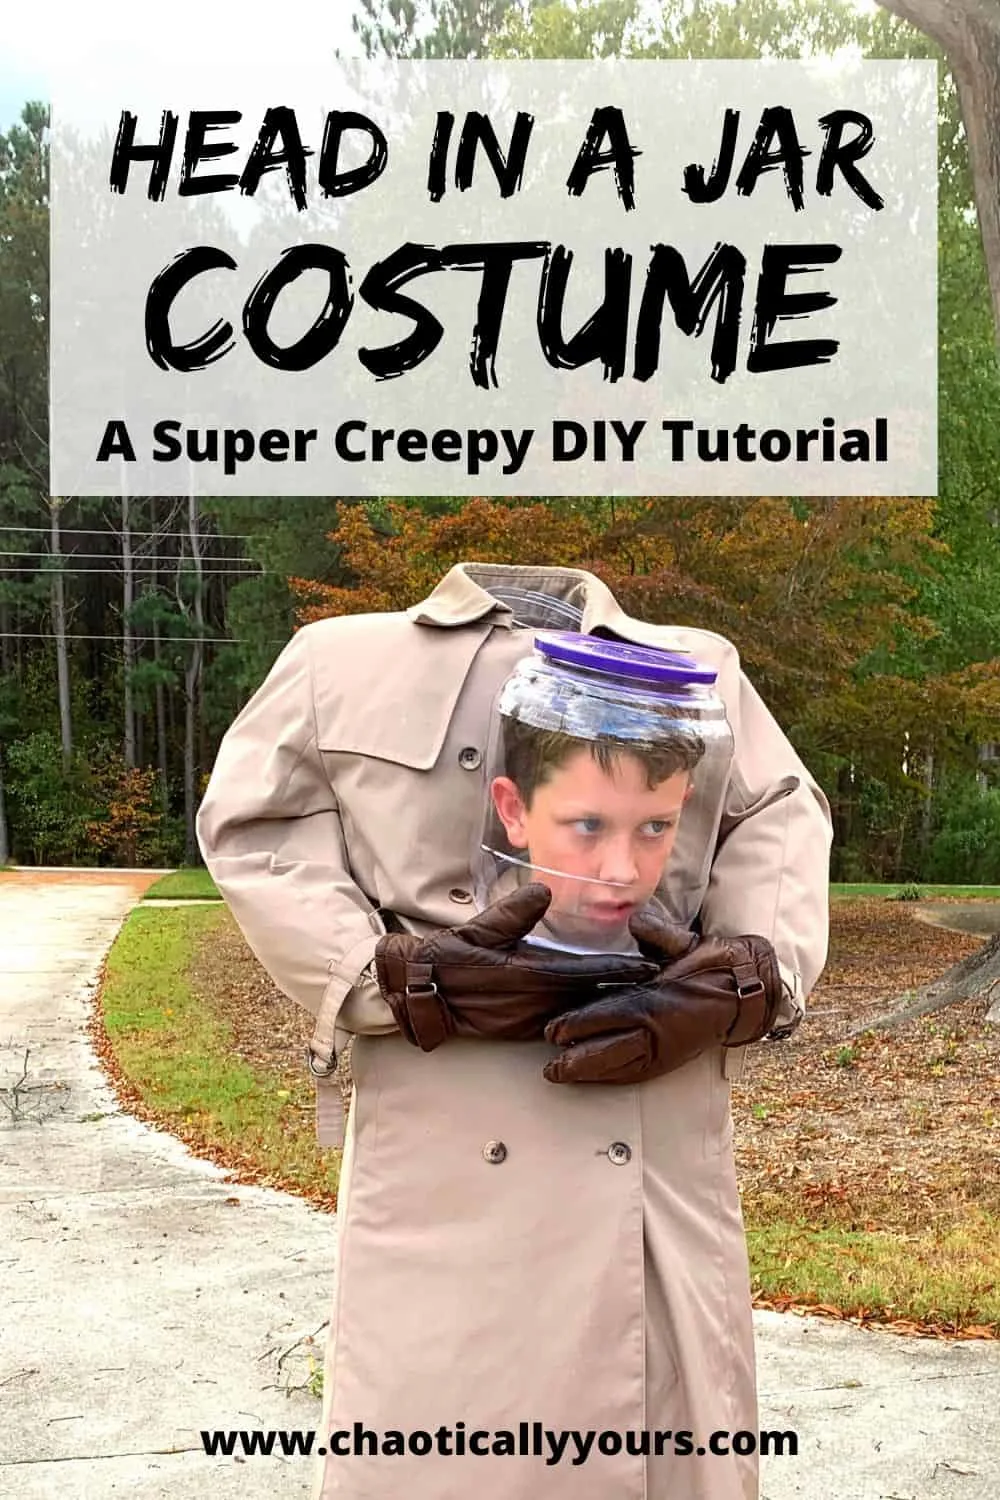 Head In A Jar Costume: A Super Creepy DIY Tutorial